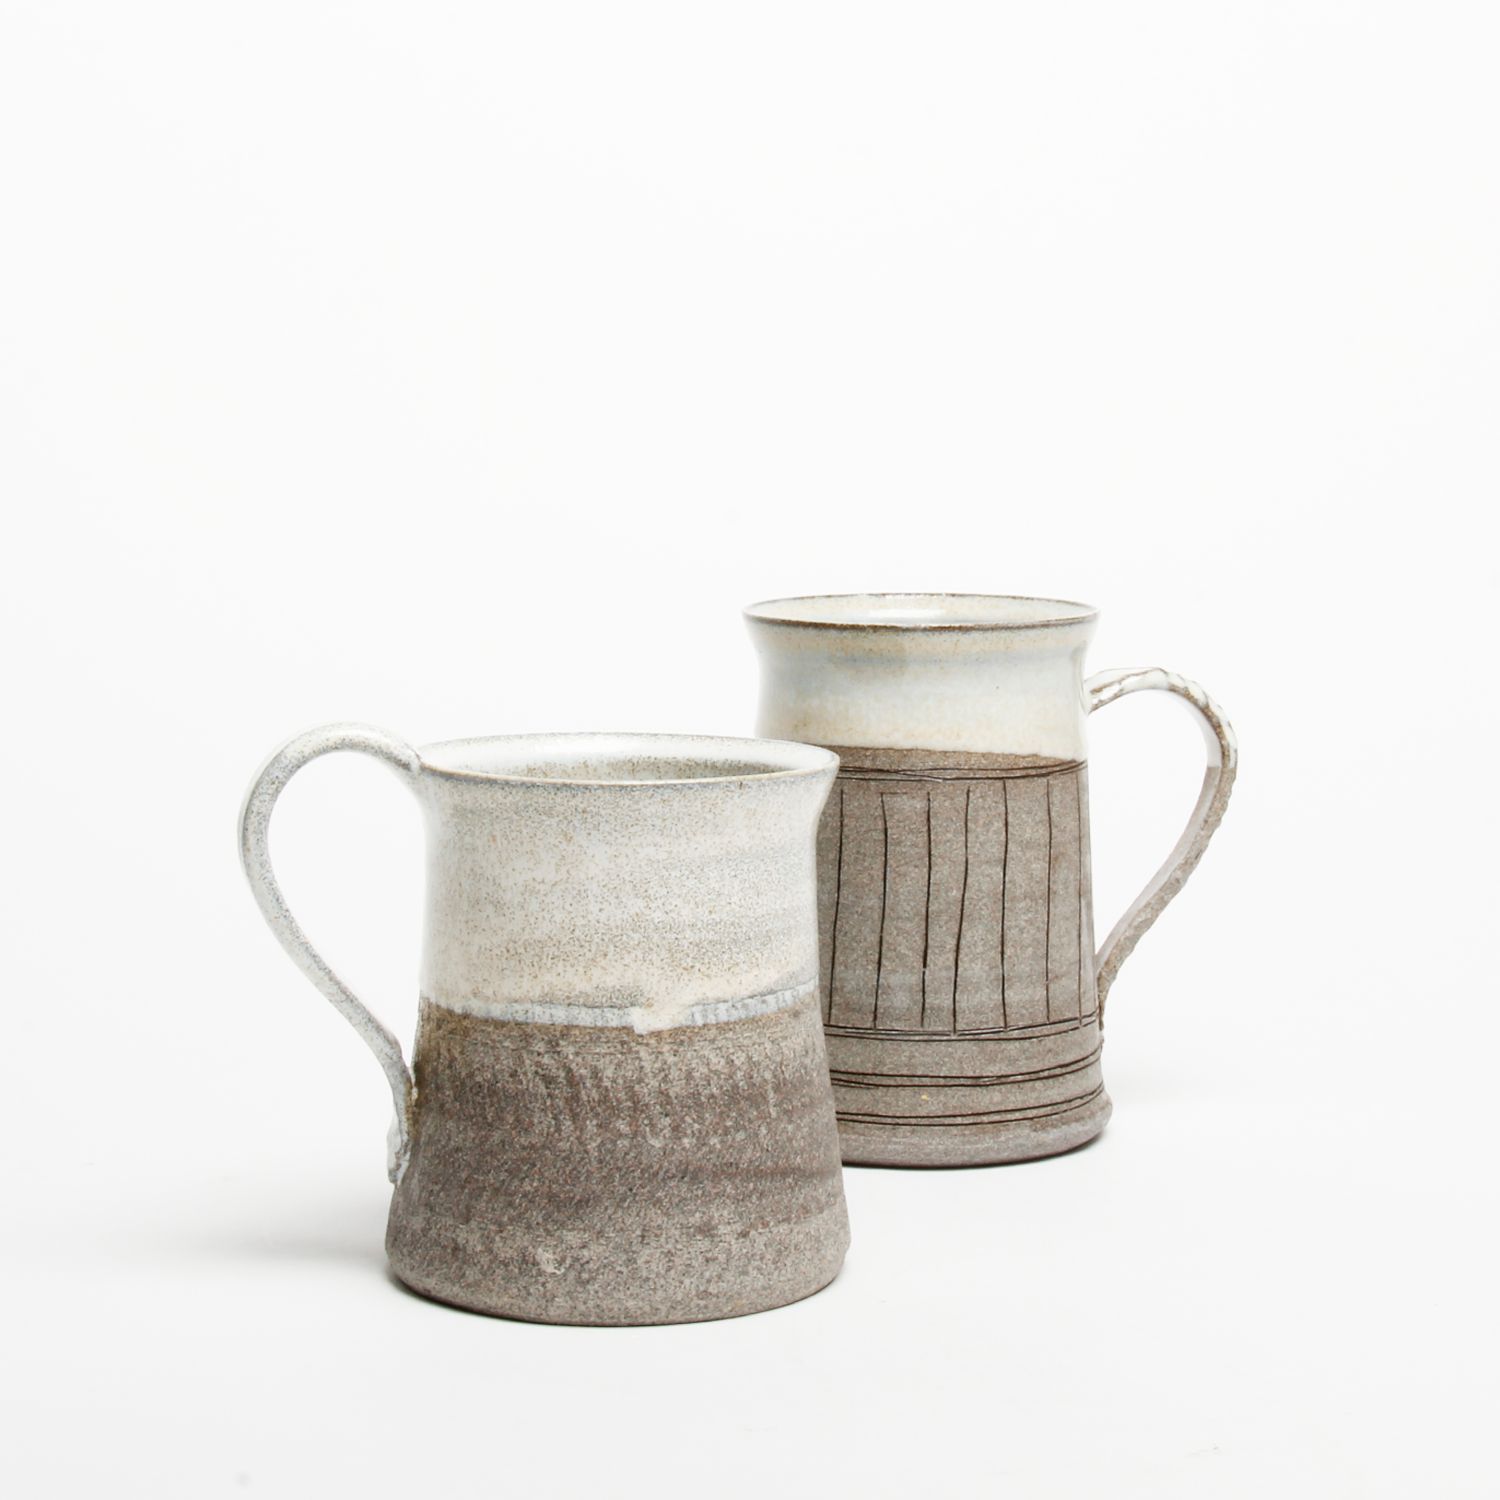 Catharina Goldnau: Medium Grey Clay Mug with Chattered Décor Product Image 2 of 2